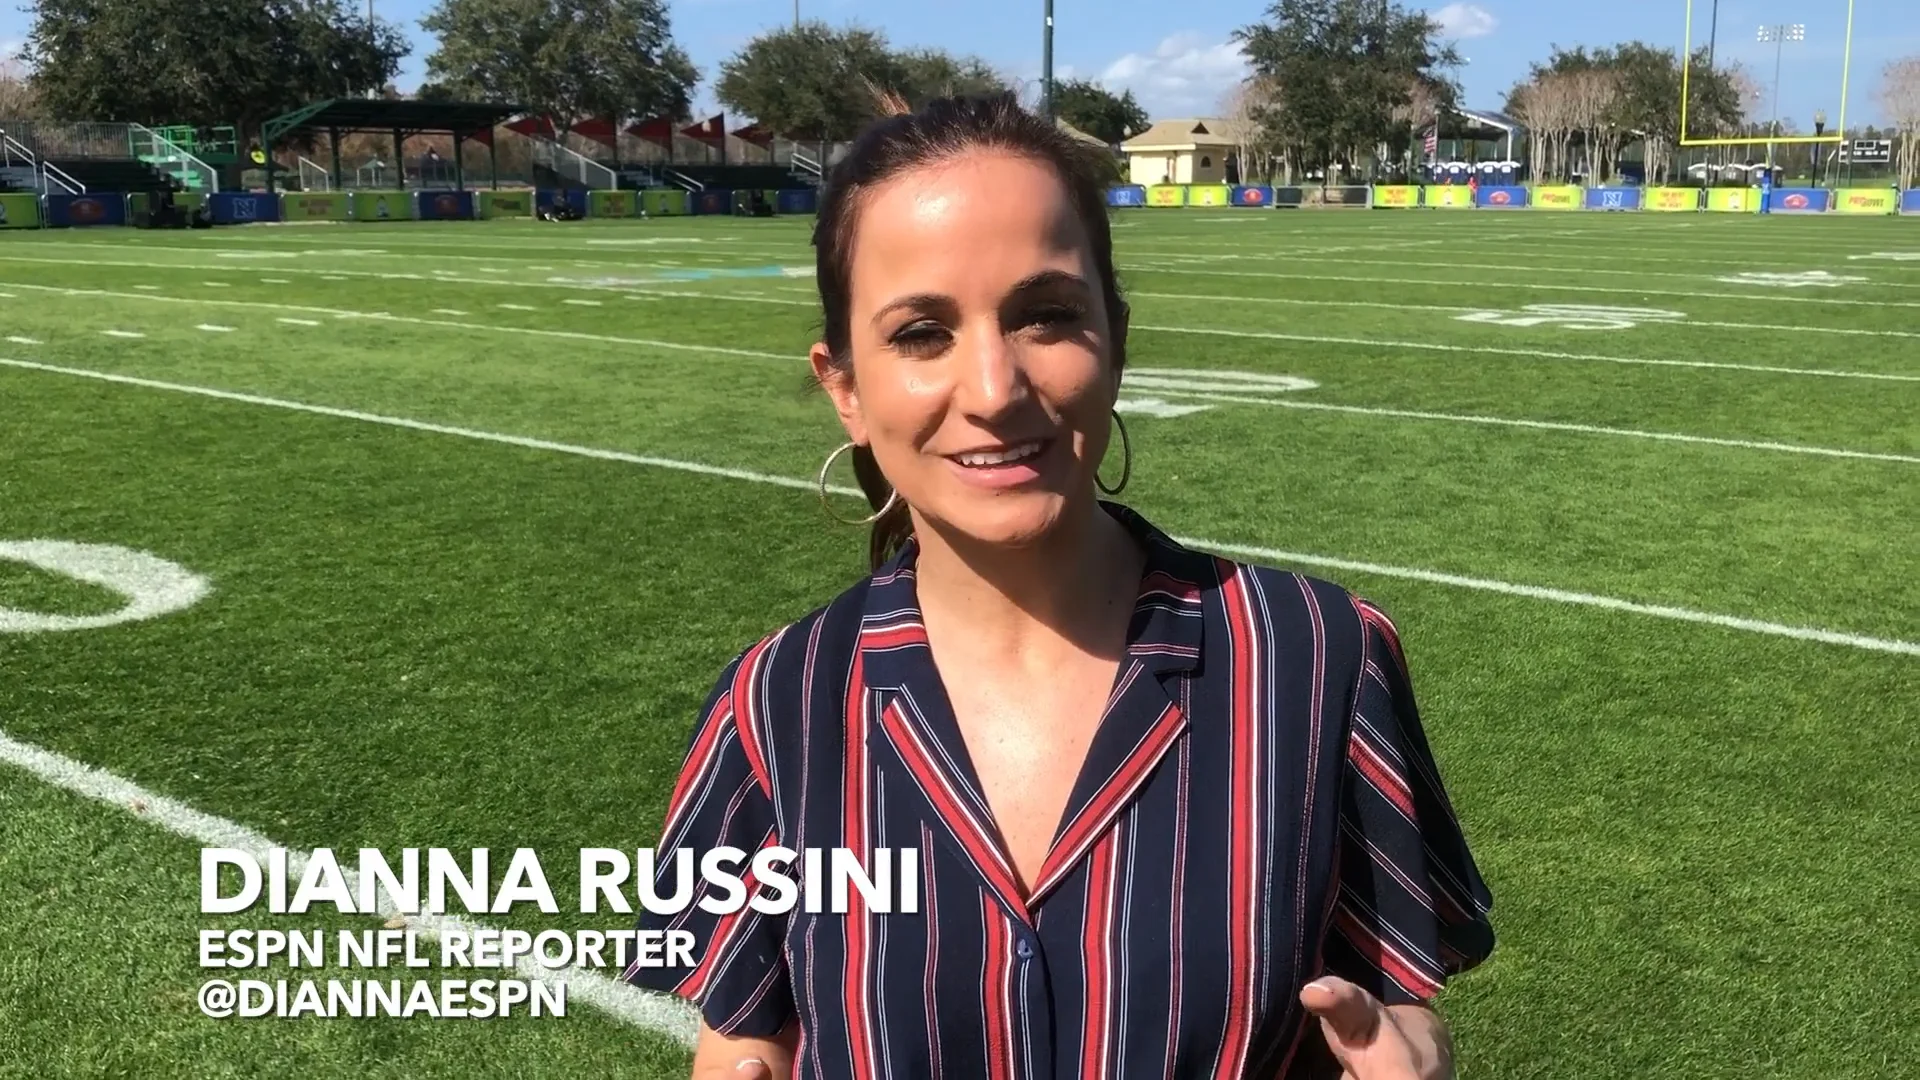 Dianna Russini 2019 Pro Bowl on Vimeo